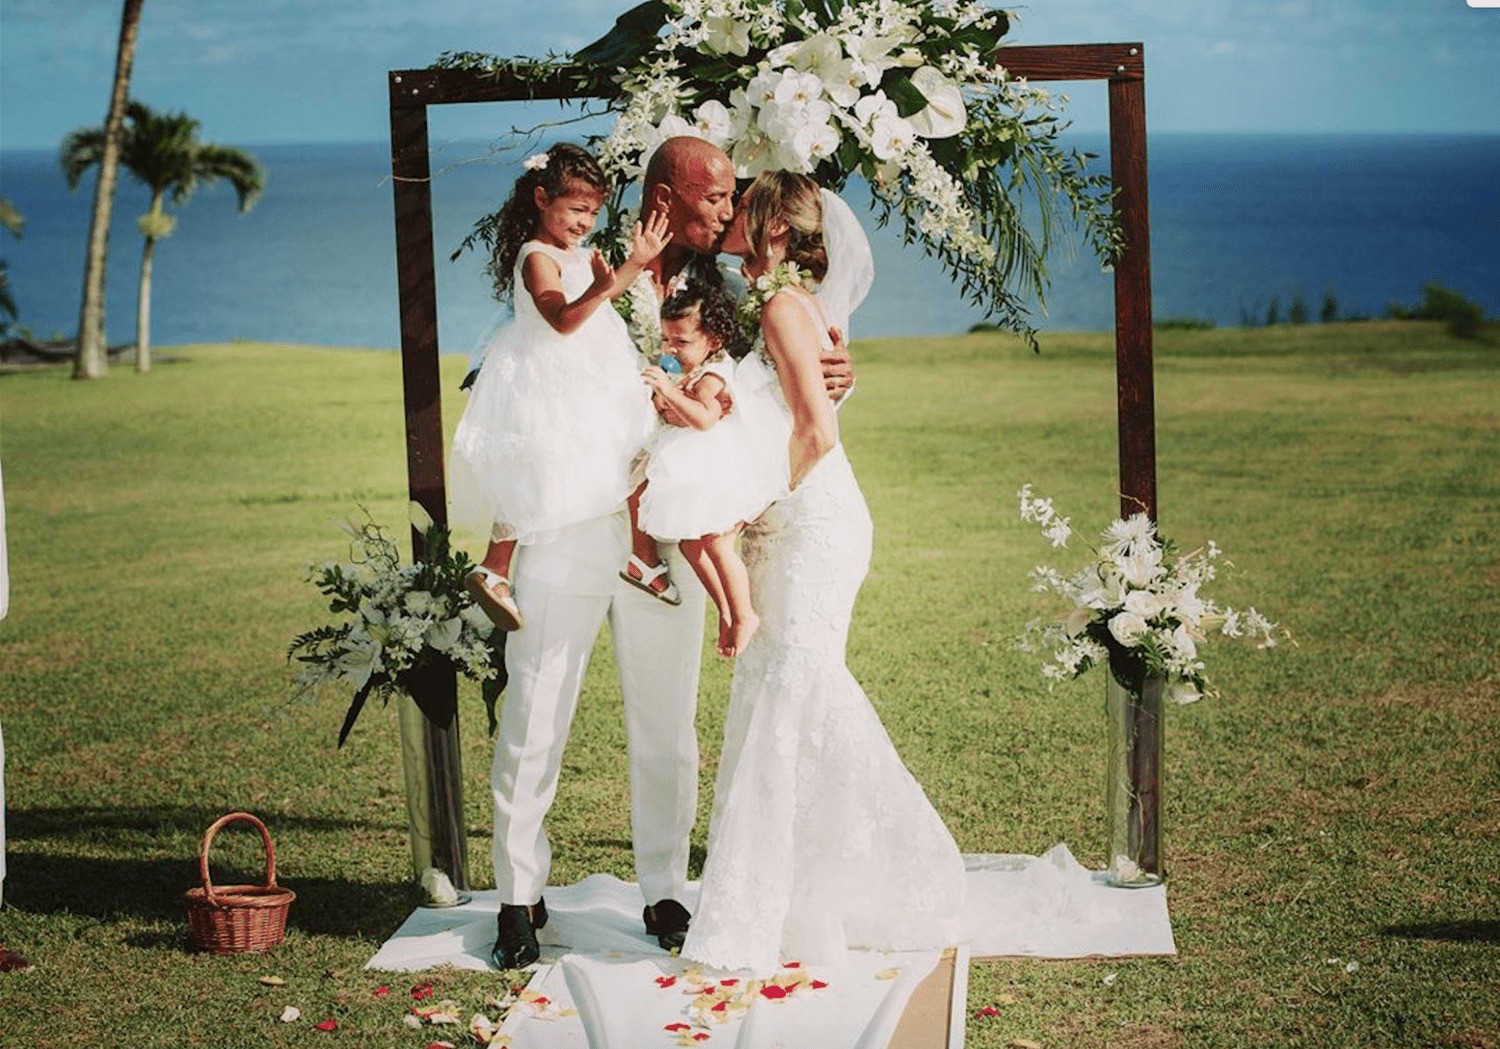 Dwayne Johnson's Hawaiian wedding to Lauren Hashian